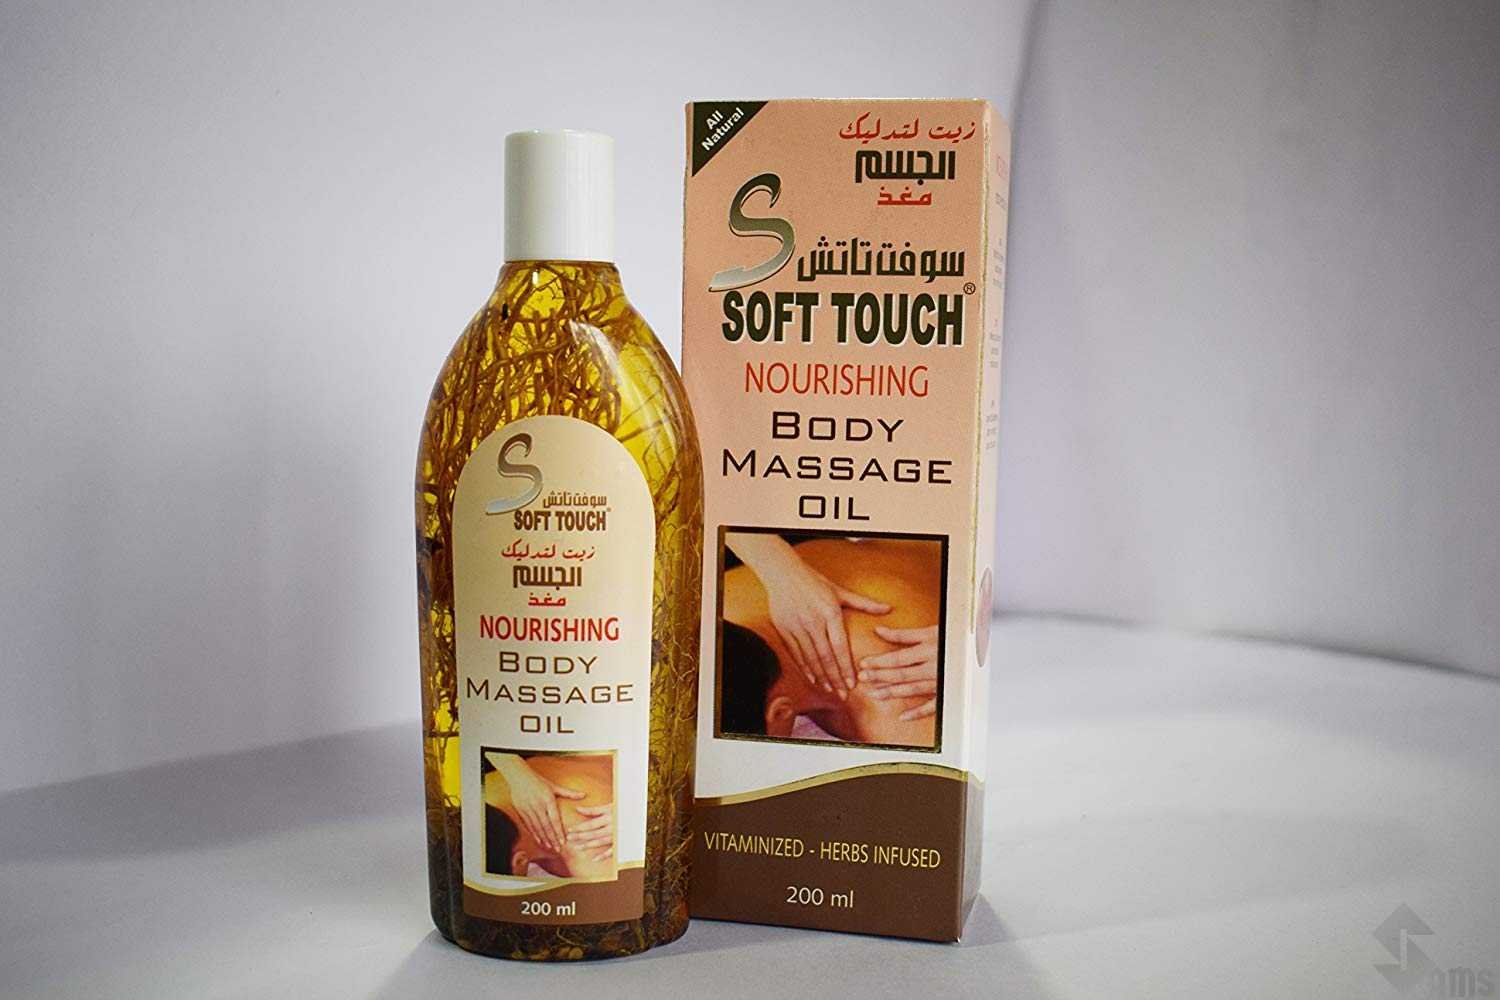 soft touch nourishing massage oil.jpg